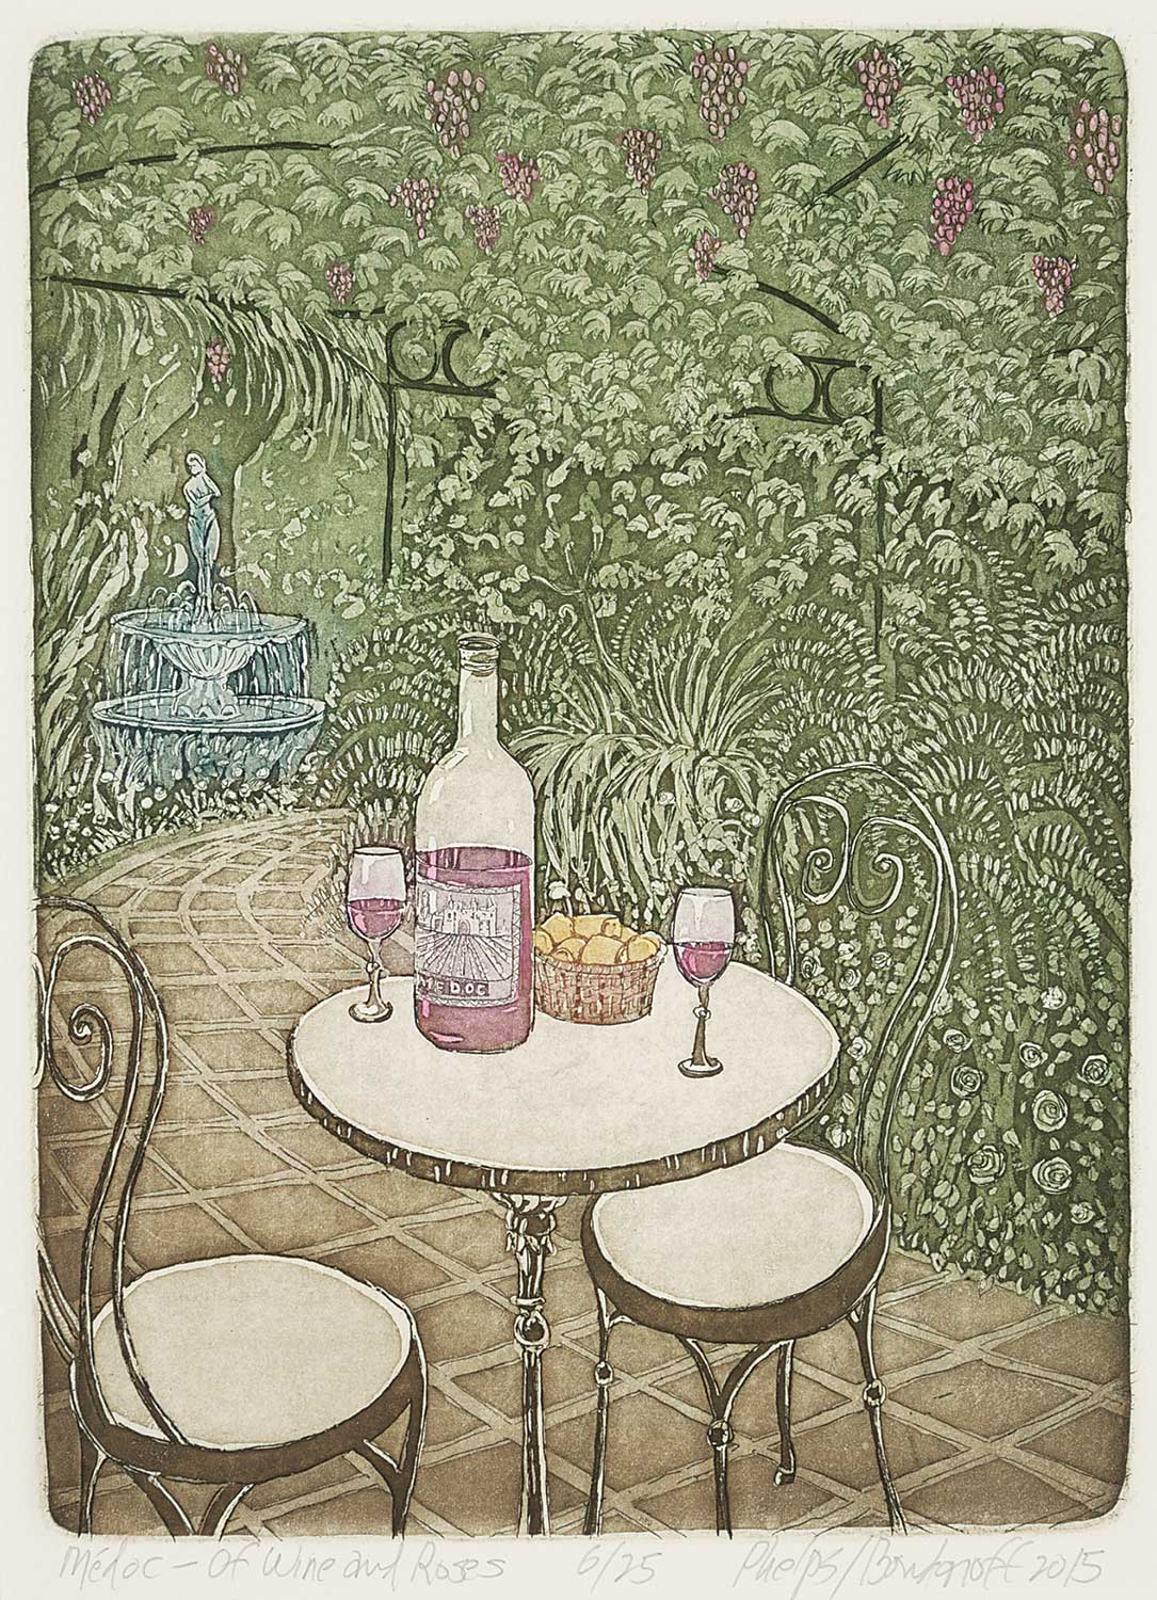 Stan Carole Phelps Bondaroff - Medoc - of Wine and Roses  #6/25